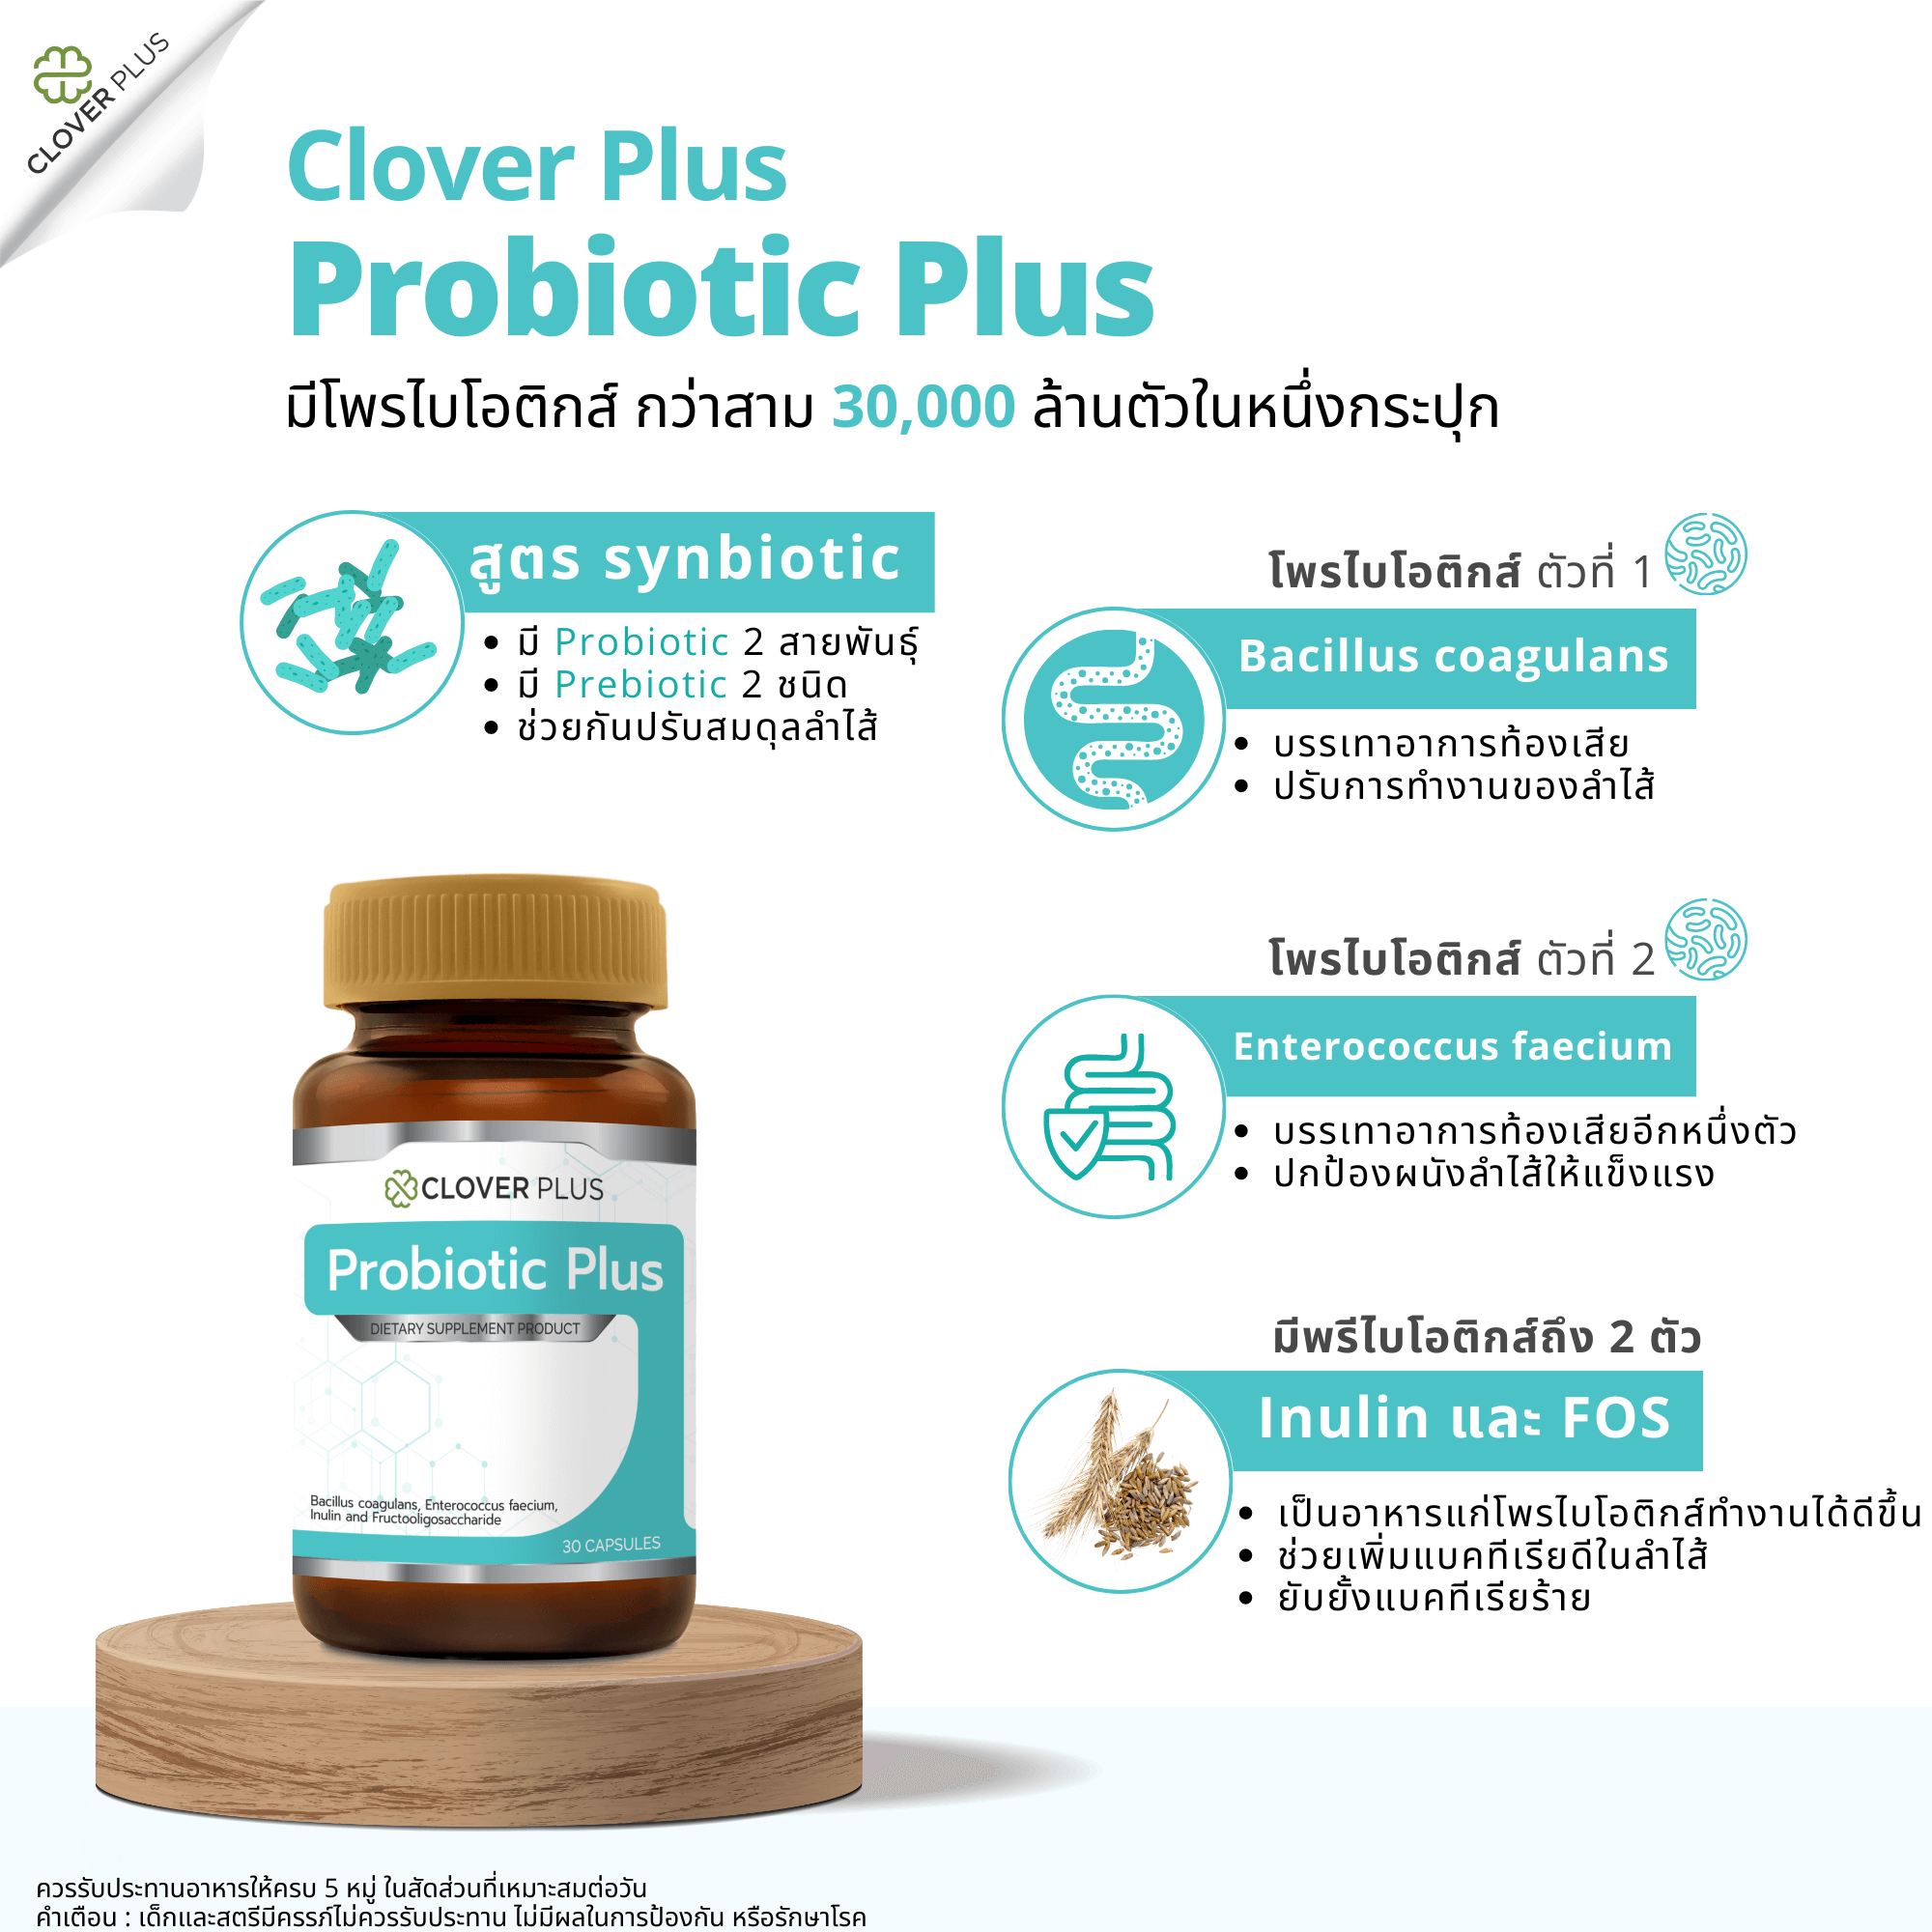 Clover Plus ,Clover Plus Probiotic Plus,โคลเวอร์พลัส, โพรไบโอติก,Probiotic 